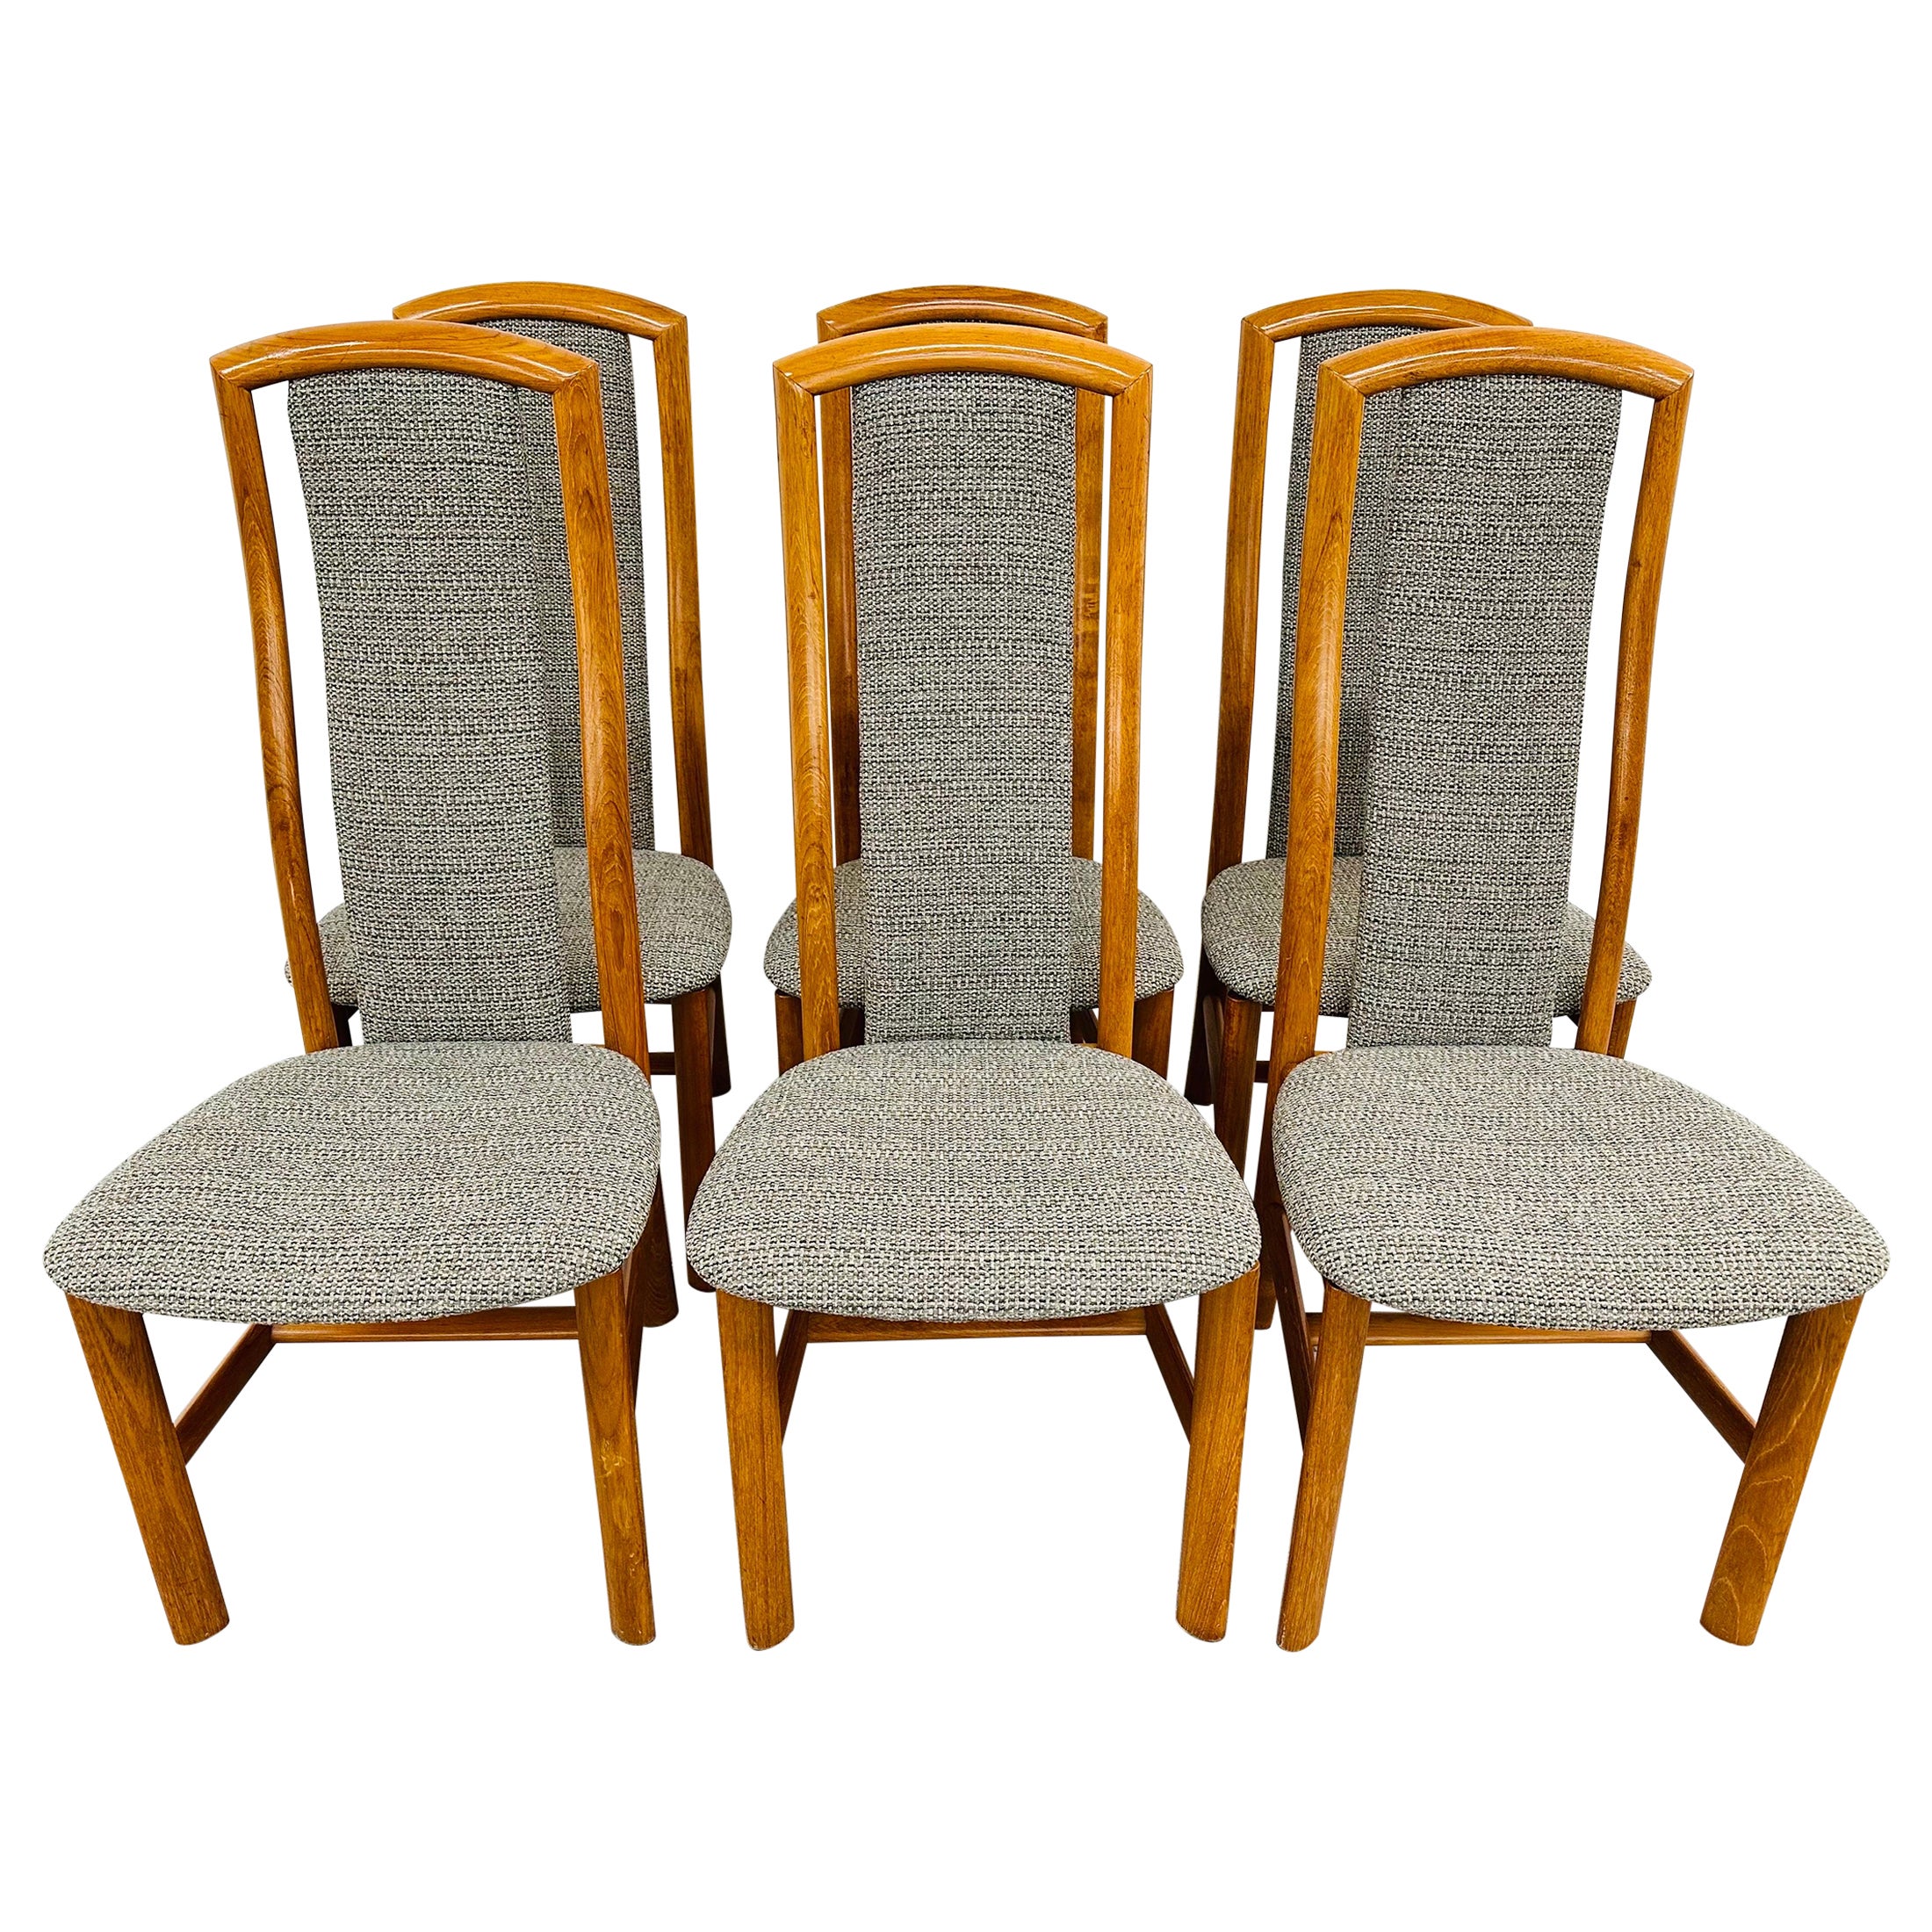 Vintage Danish Modern Teak Dining Chairs - Set of 6 For Sale